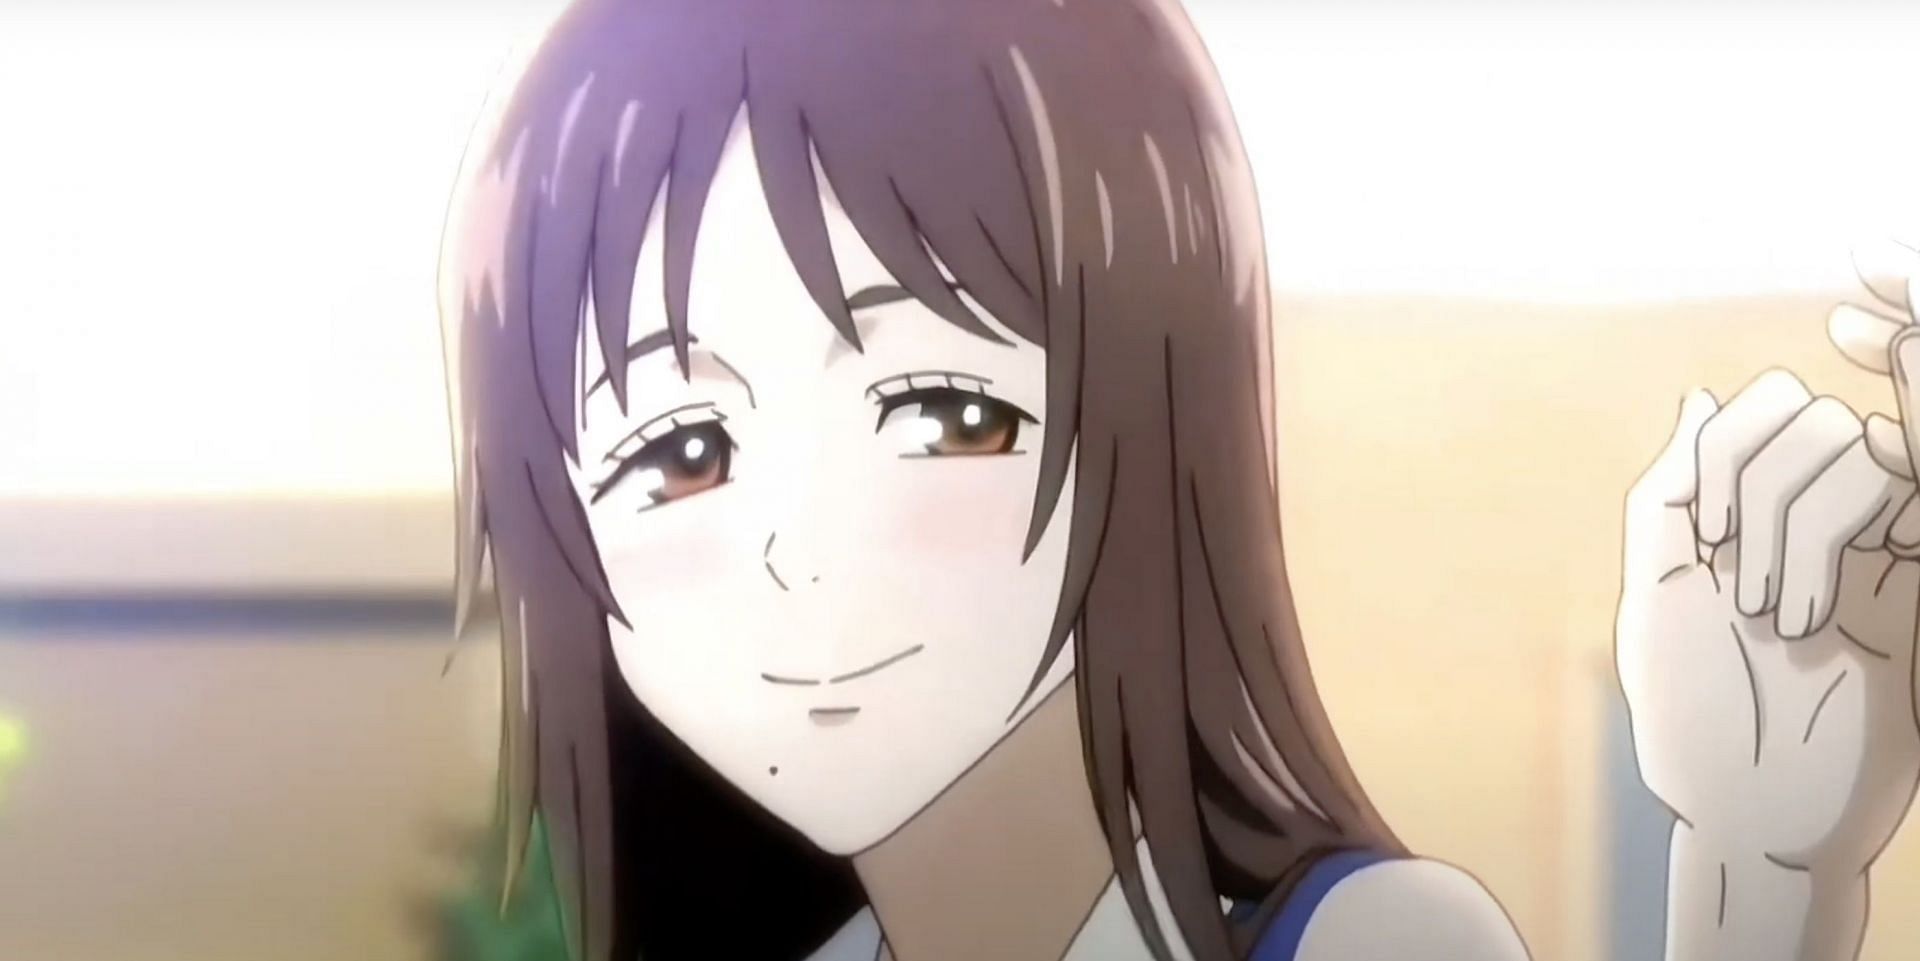 Rika Orimoto as seen in anime (Image via MAPPA)